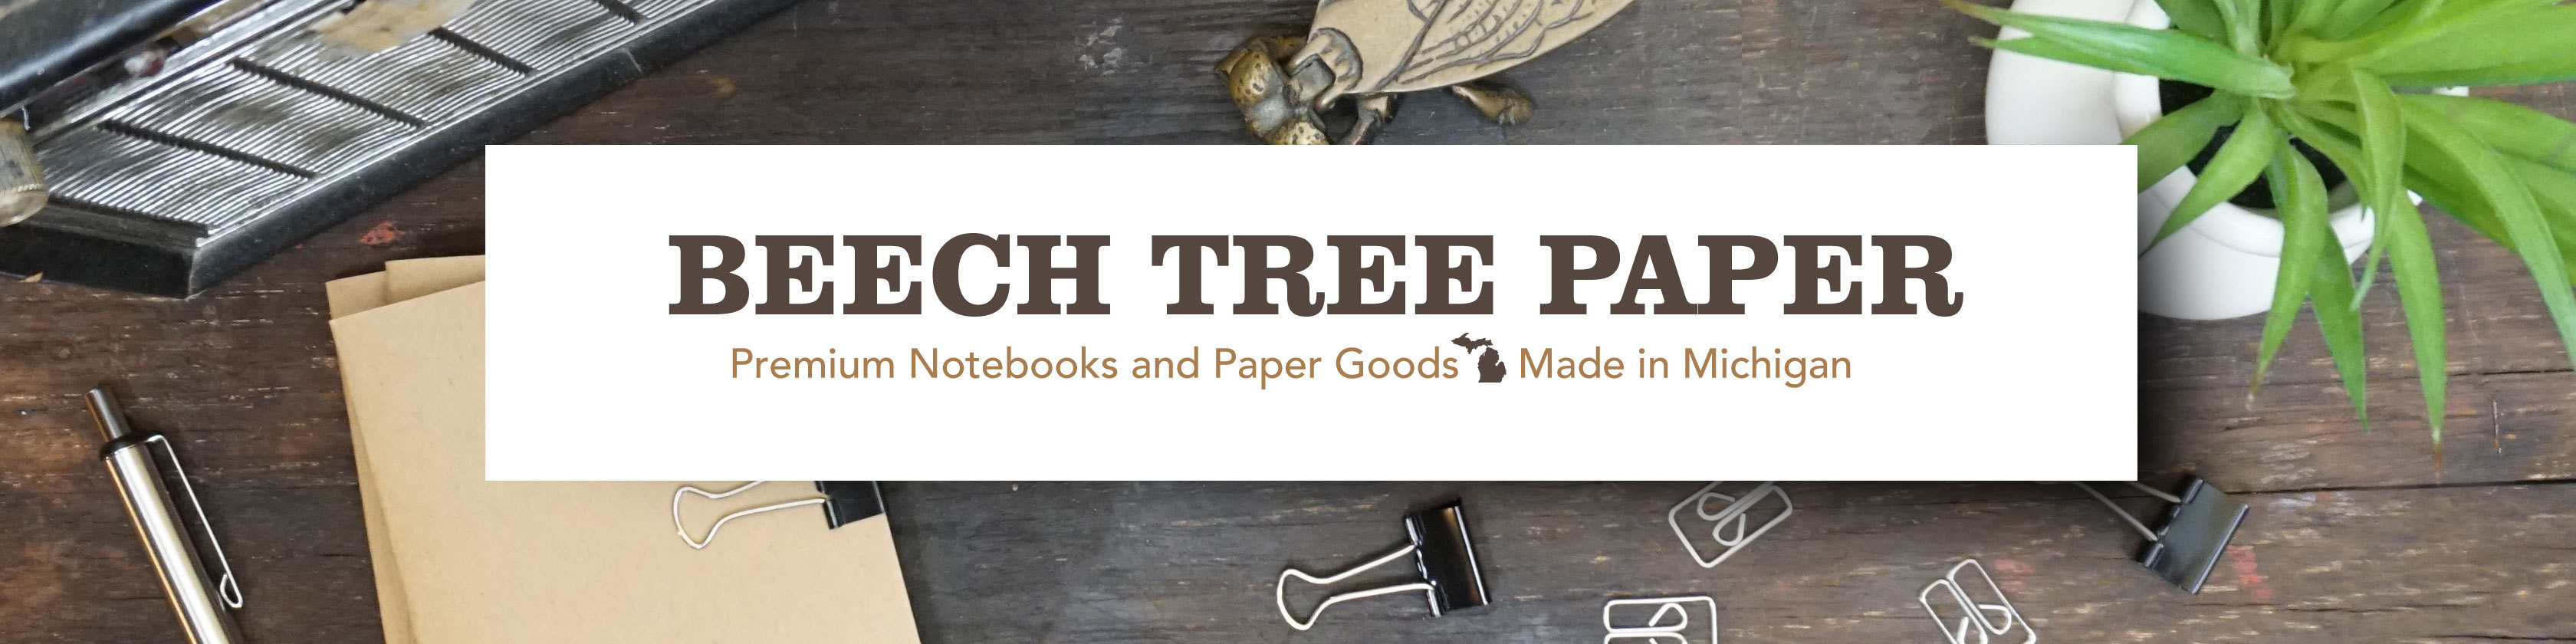 Beech Tree Paper